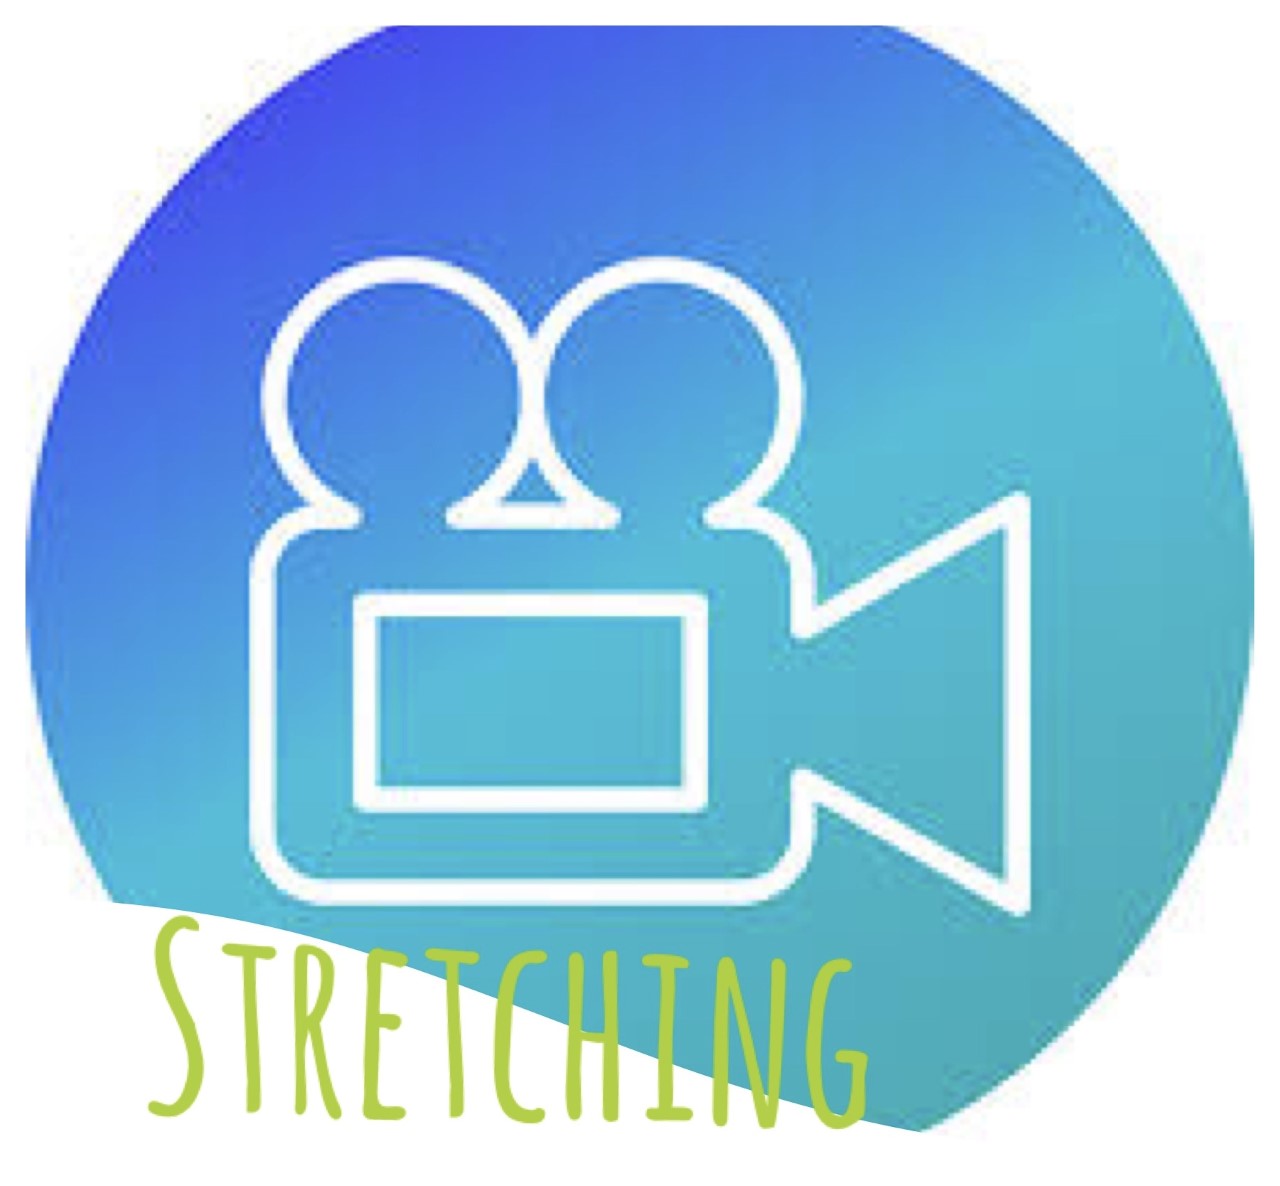 cours d'essai / Stretching